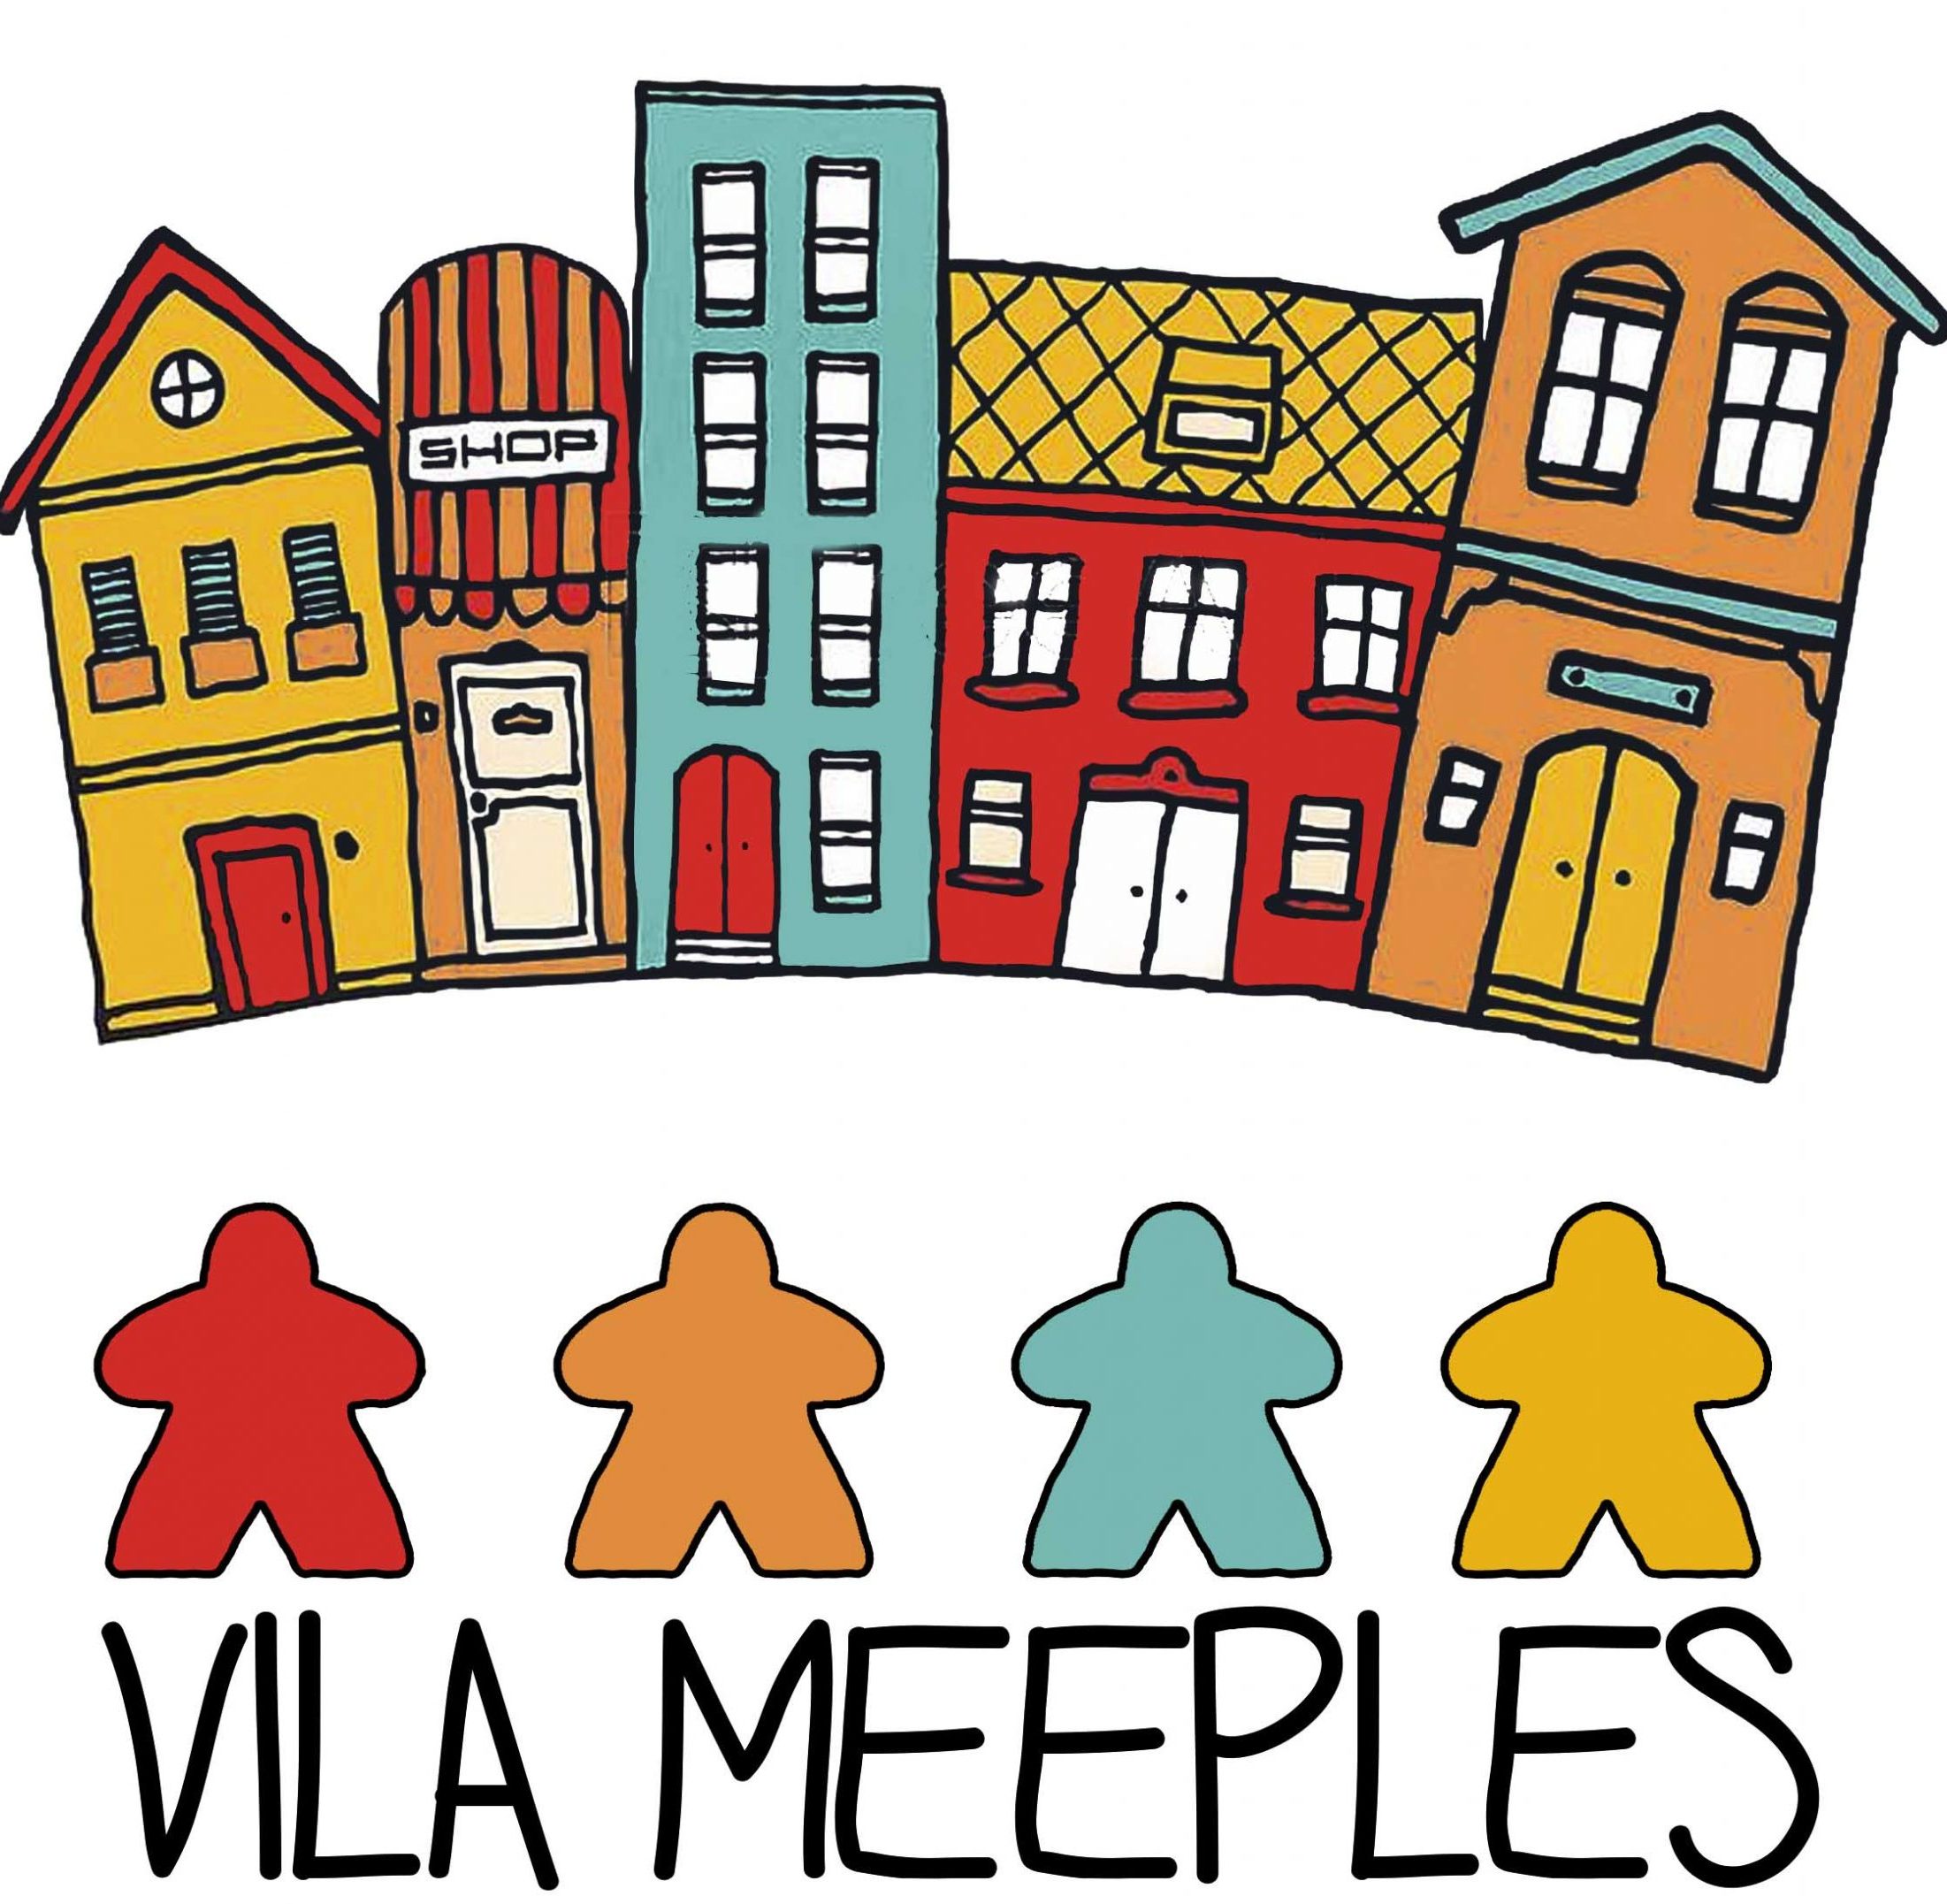 Premio Ludopedia – Jogo Expert 2019 – Vila Meeples